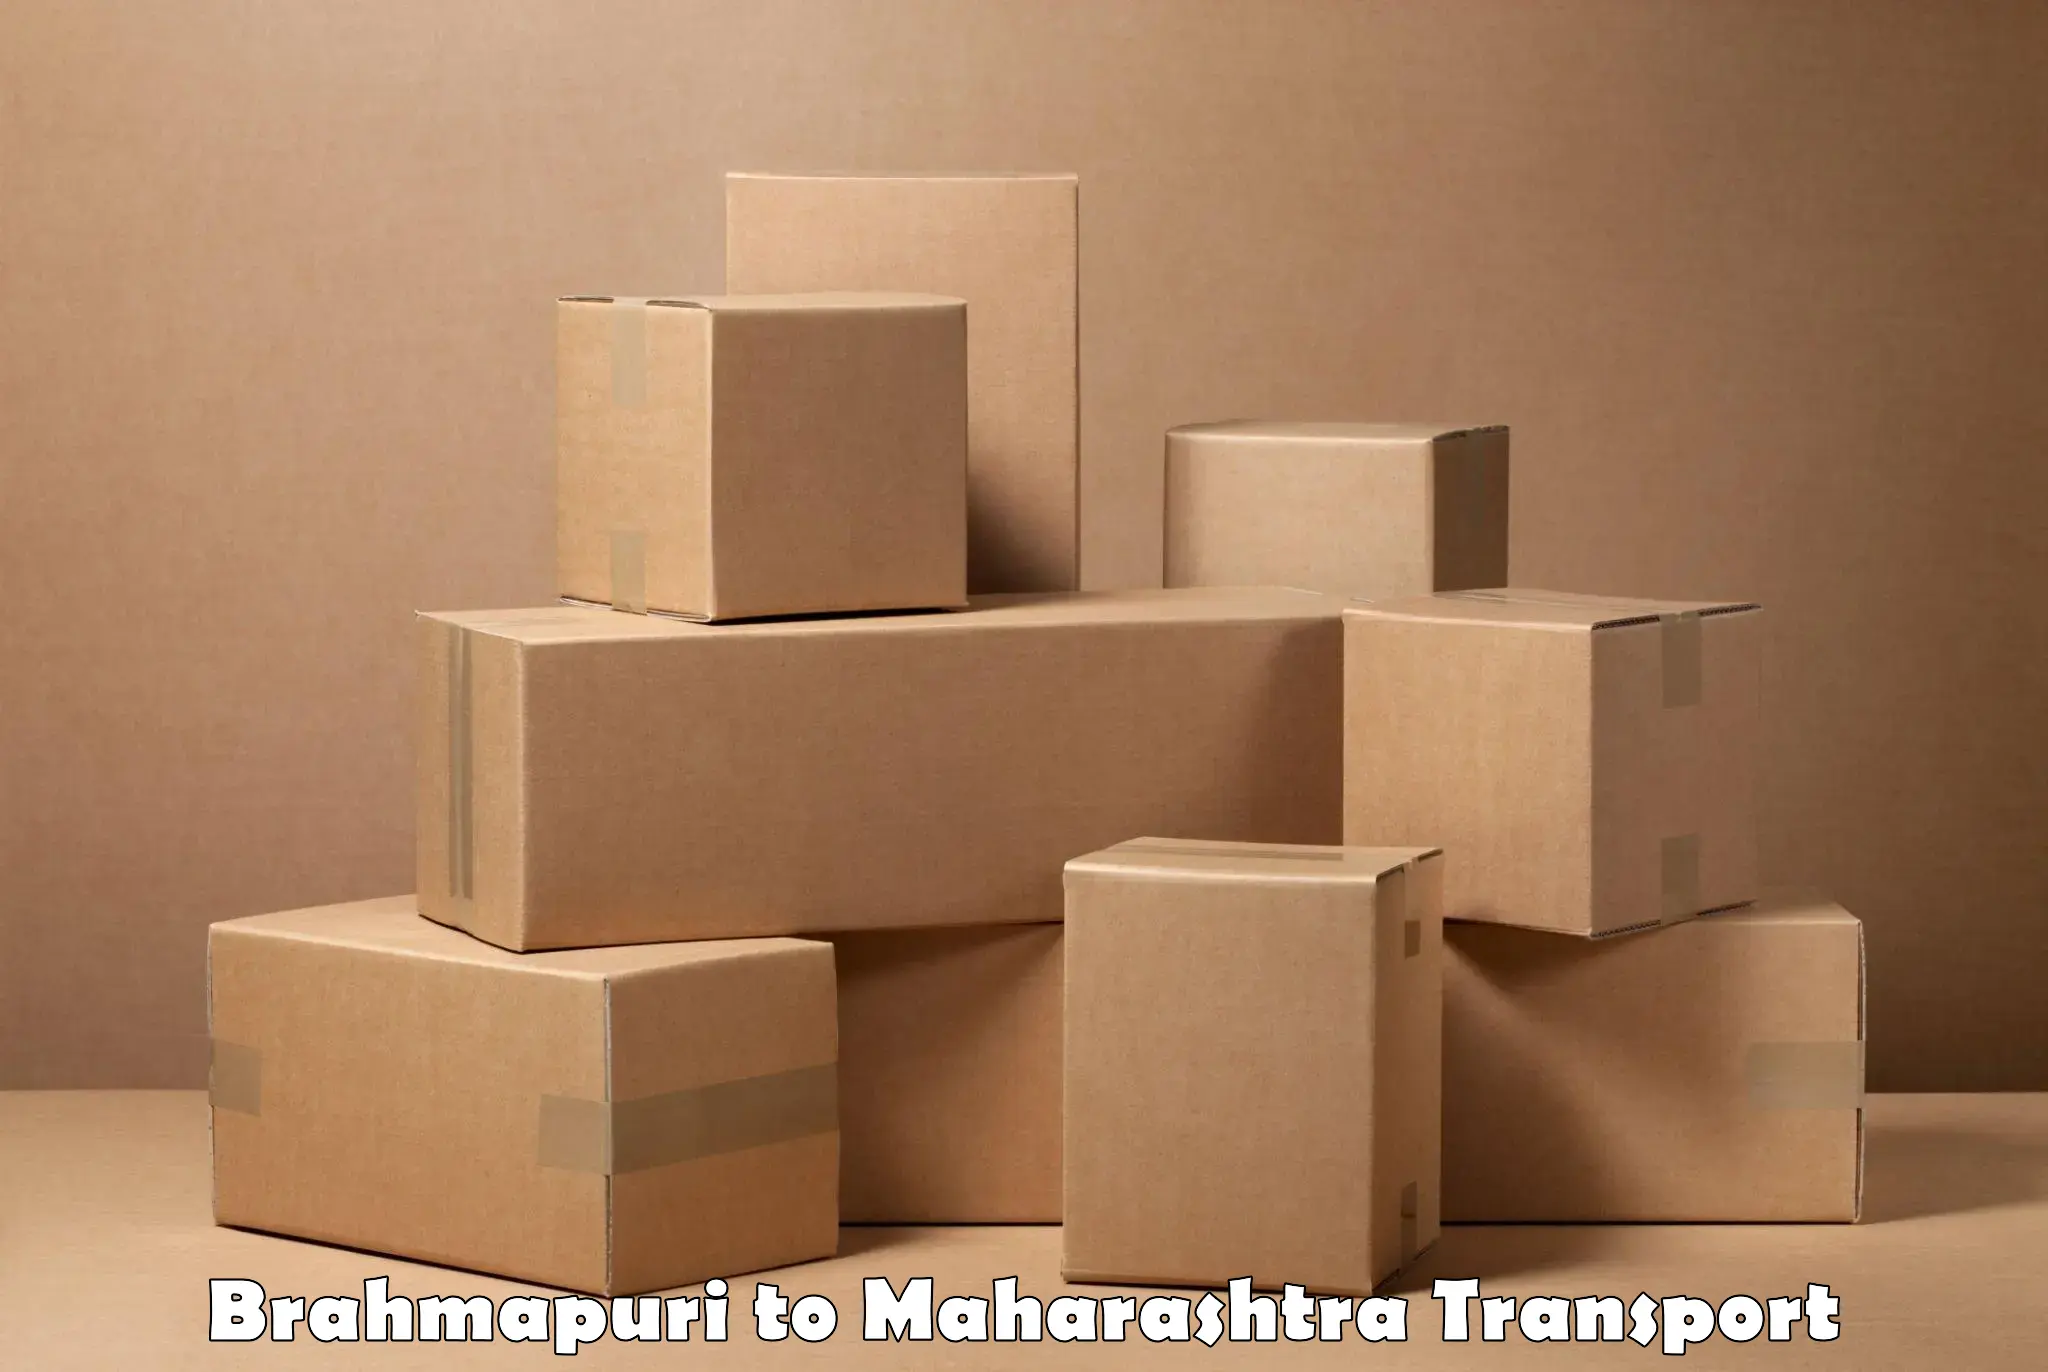 Delivery service Brahmapuri to Georai